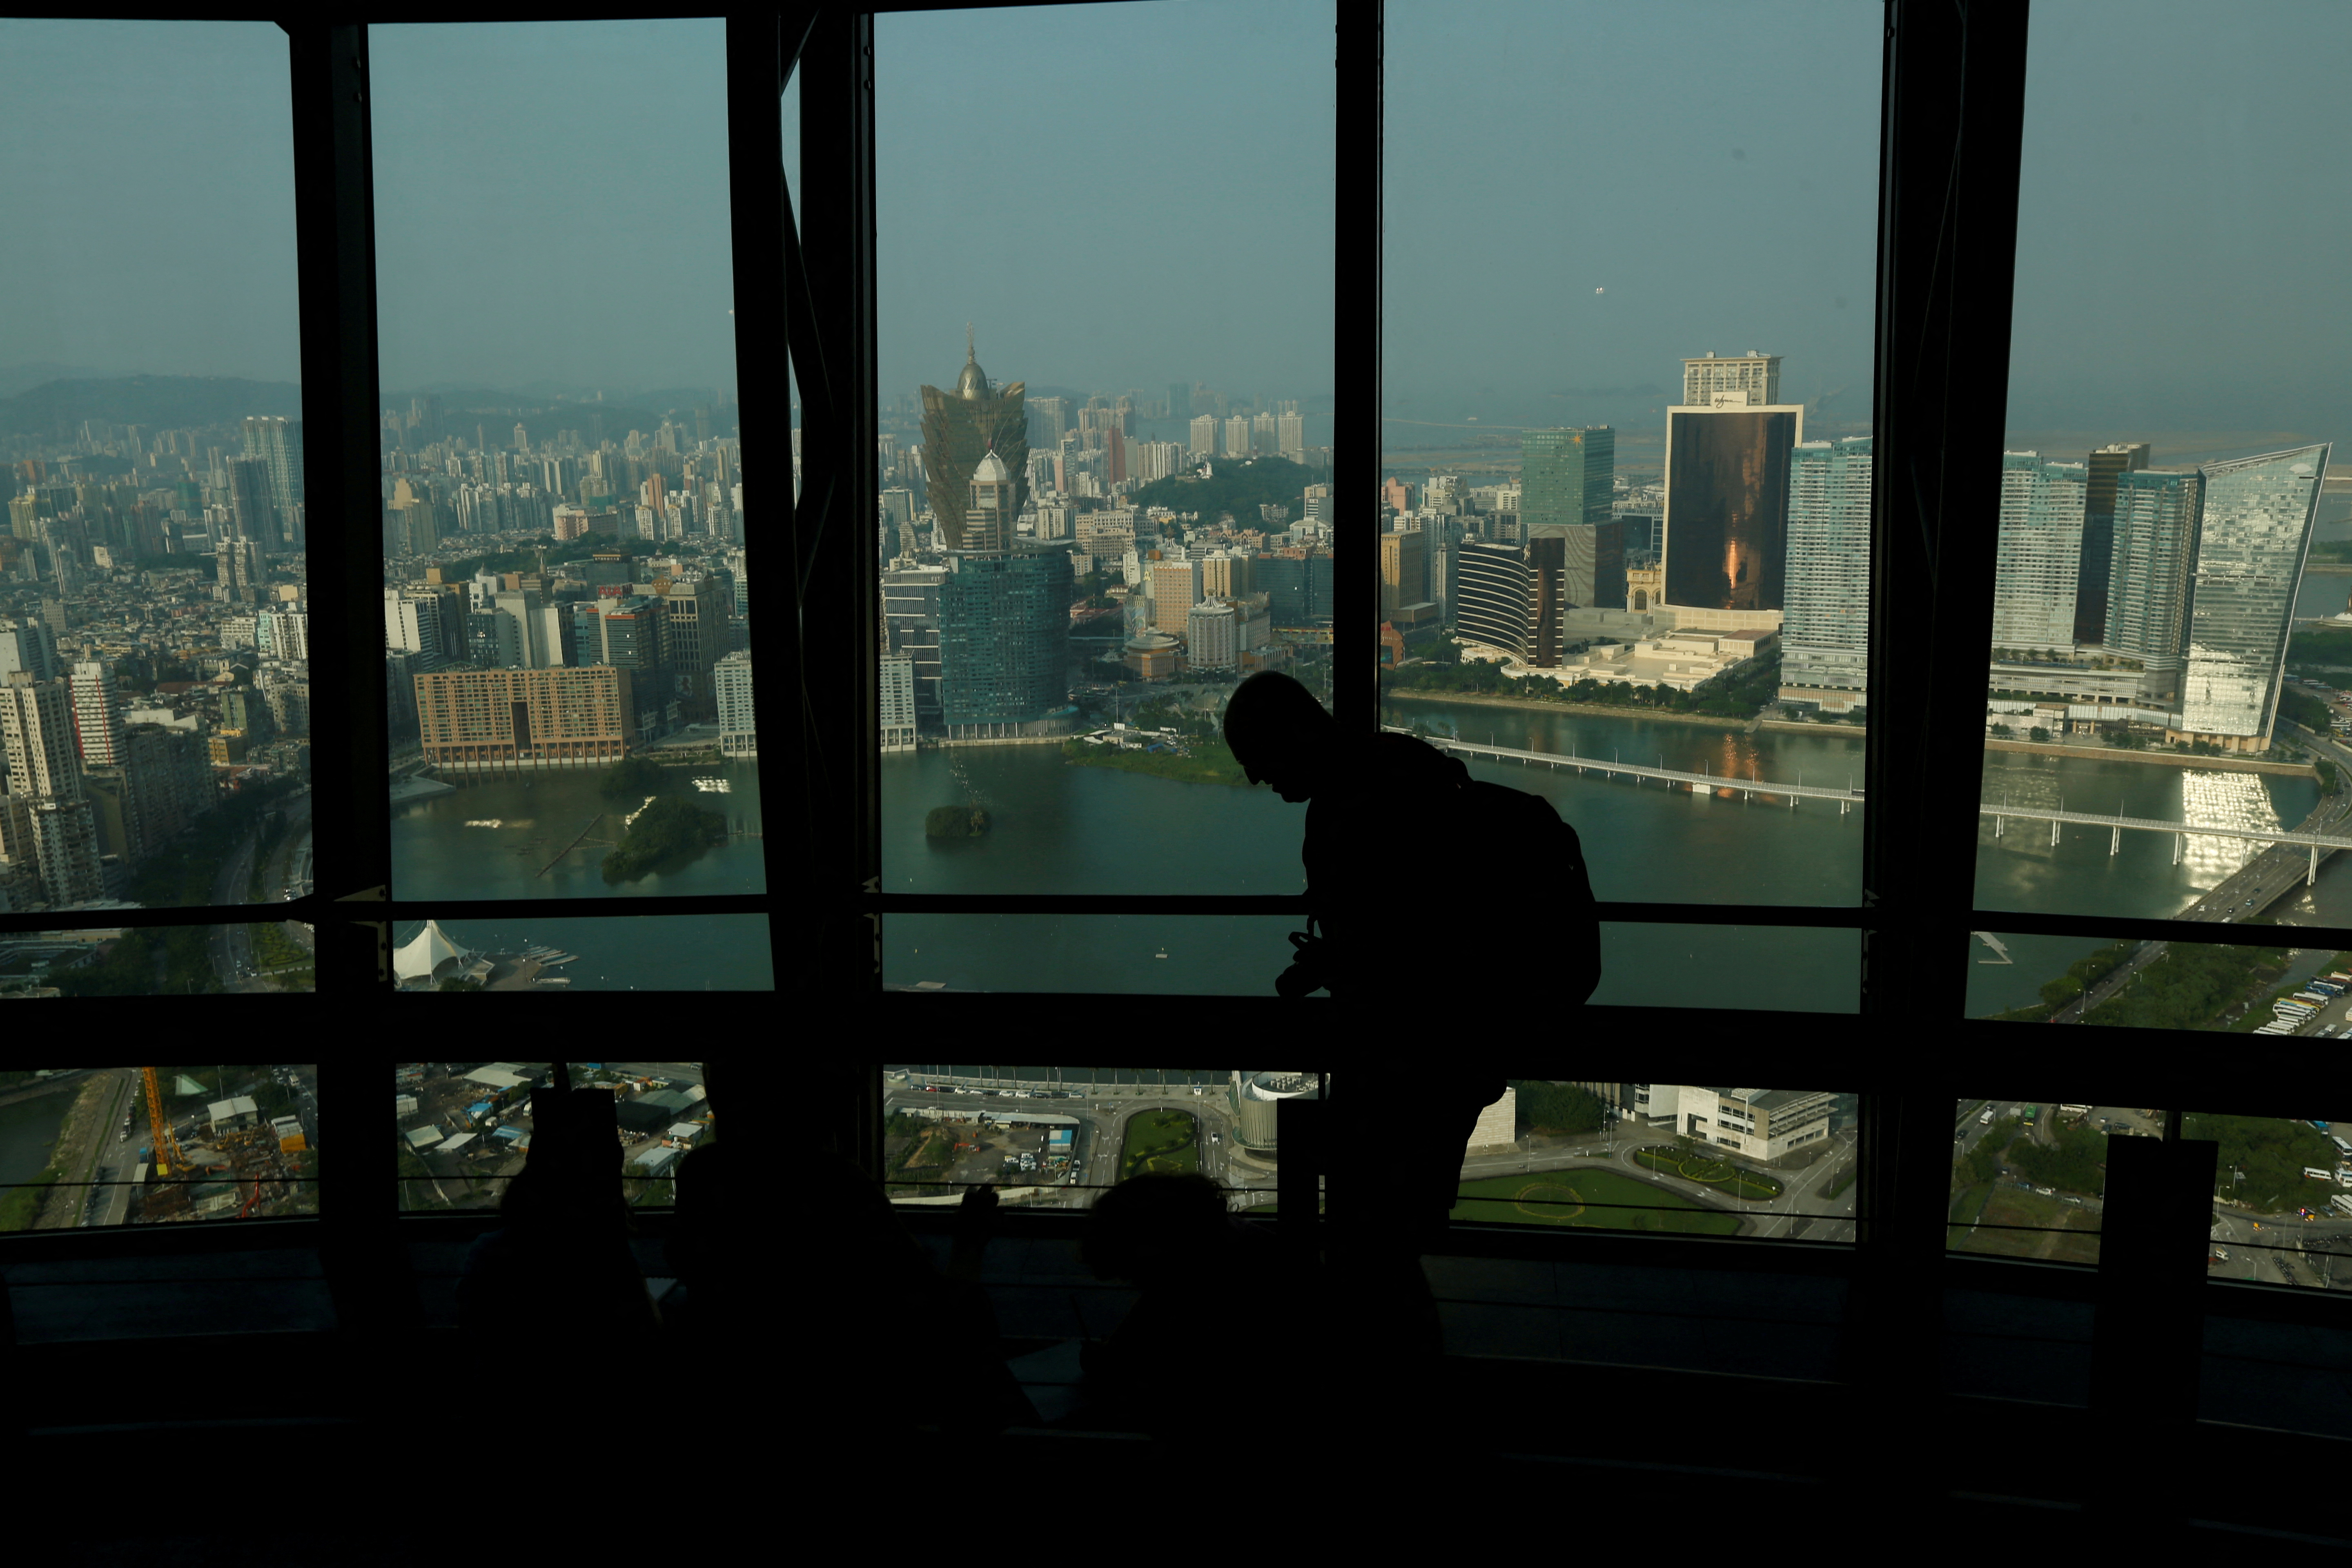 A visitor walks inside Macau Tower overlooking a general view of Macau peninsula